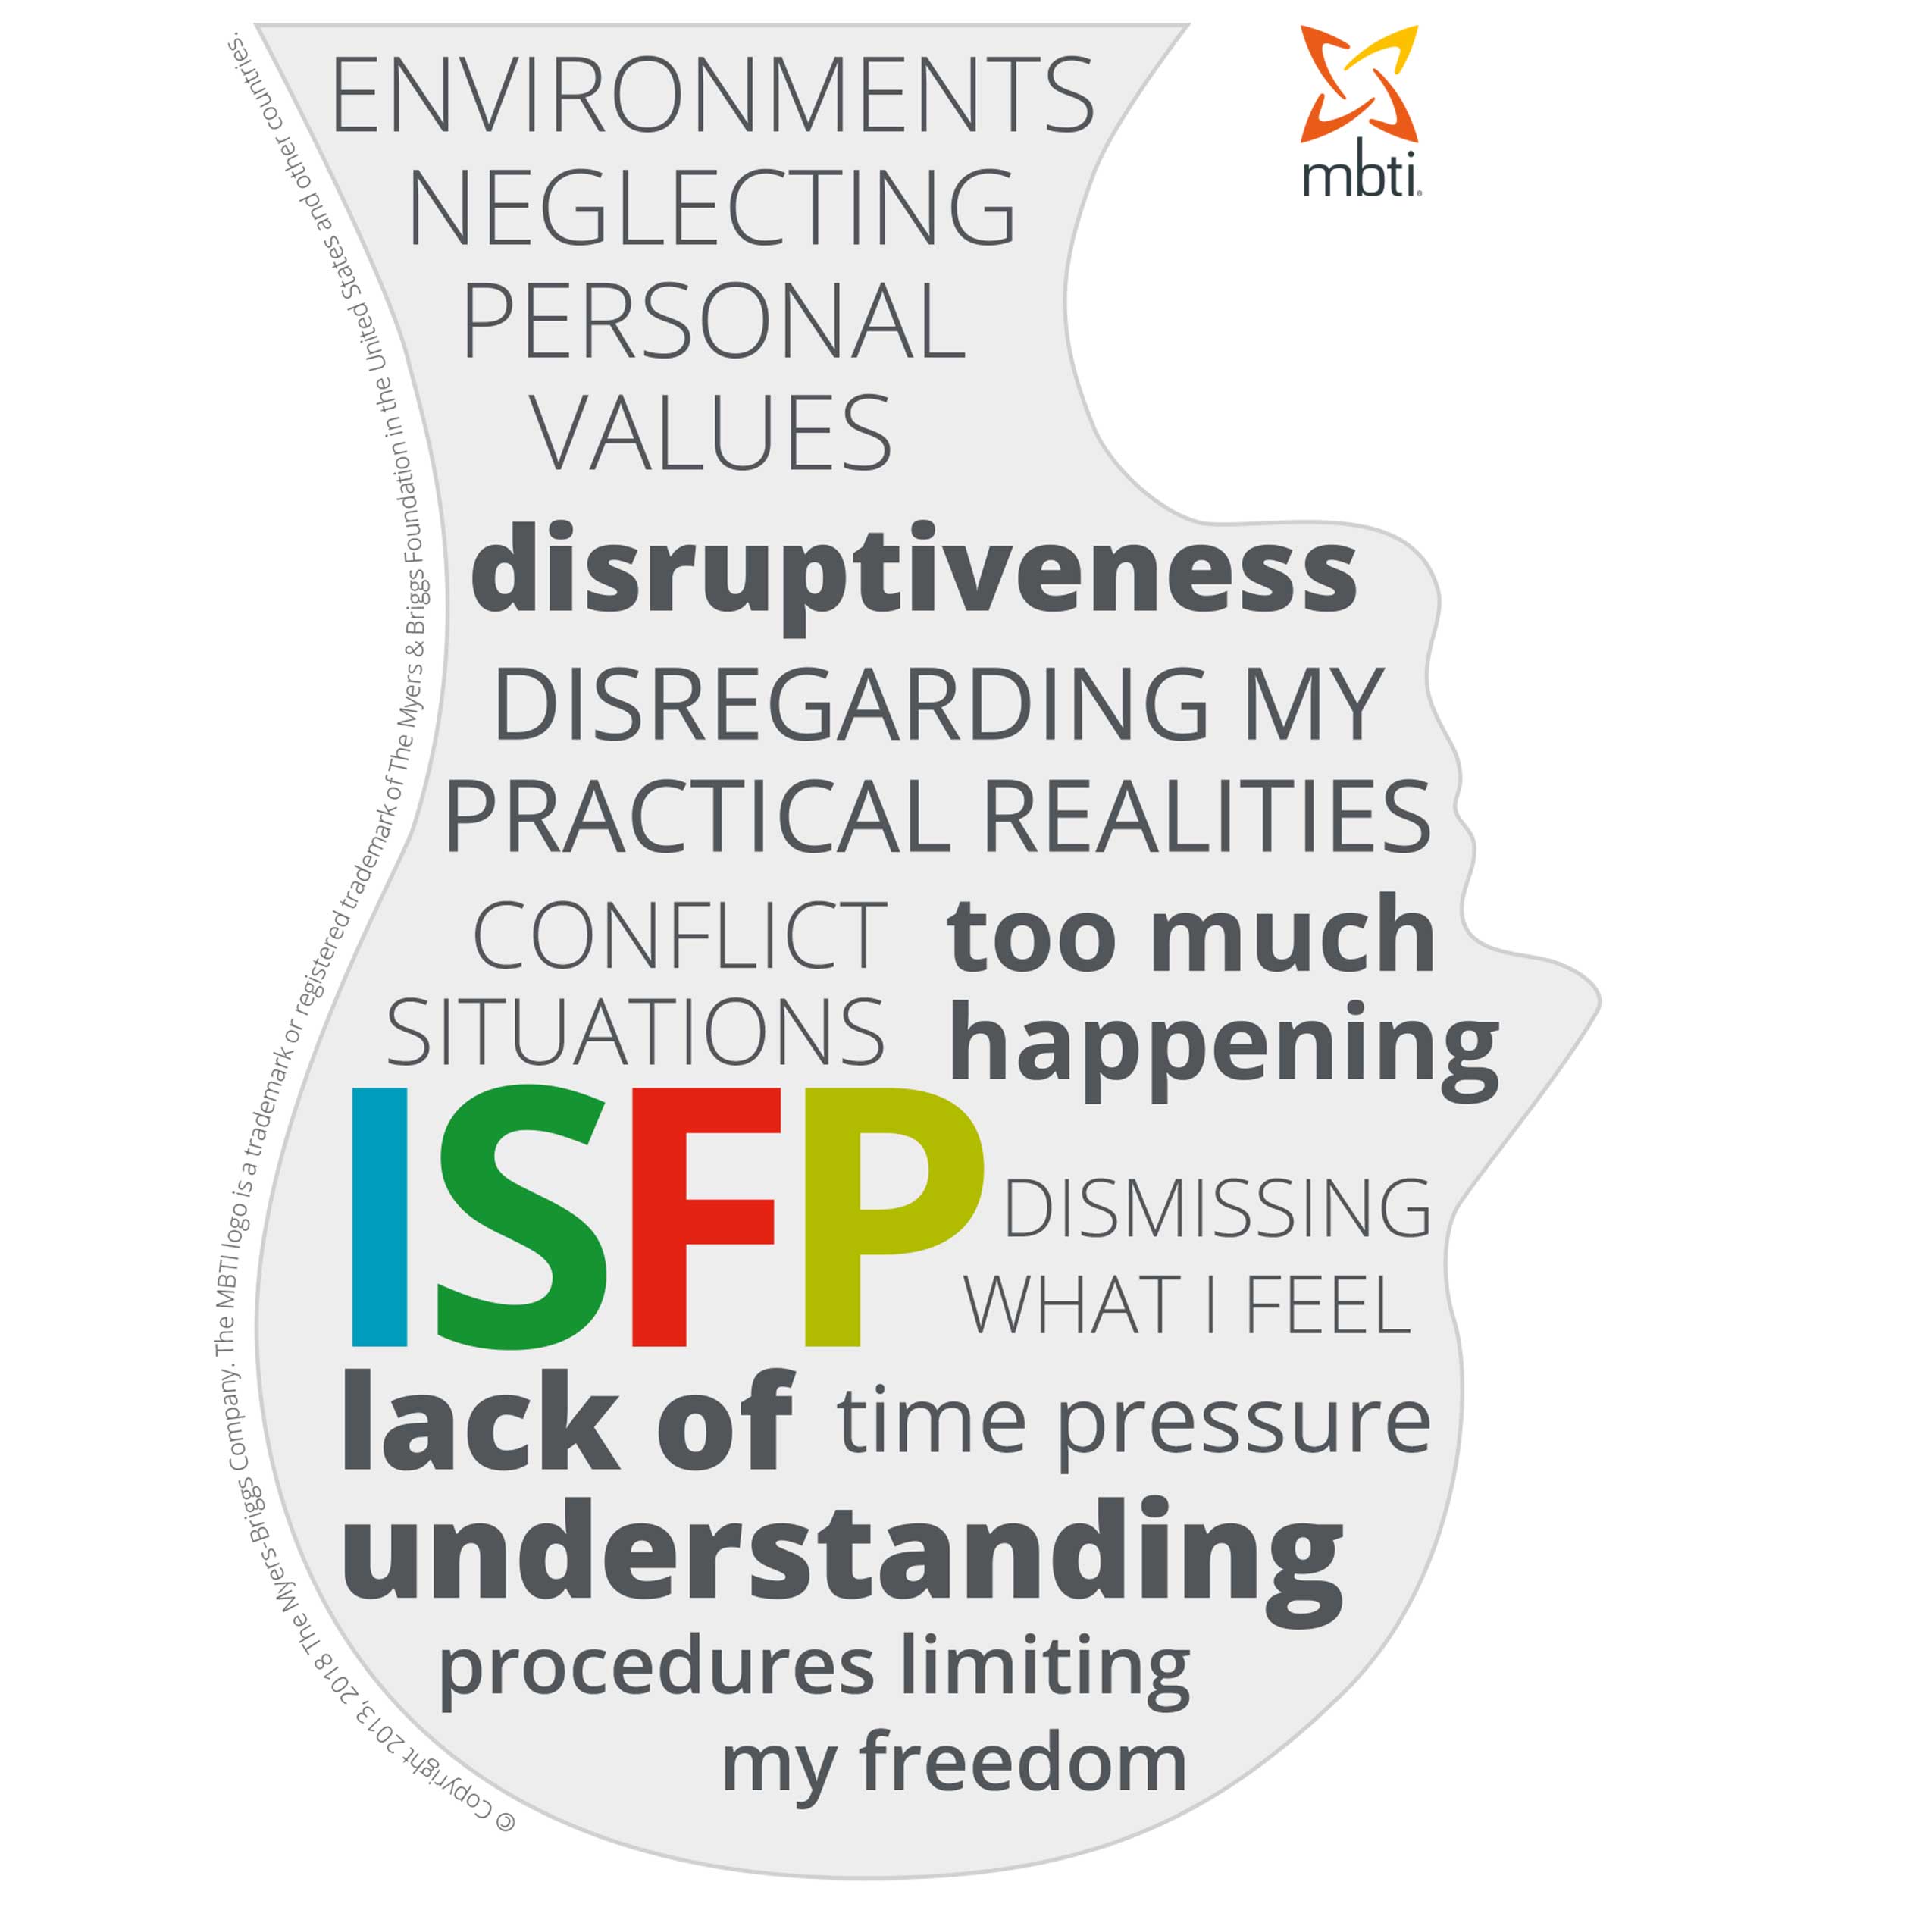 ISFPstressors